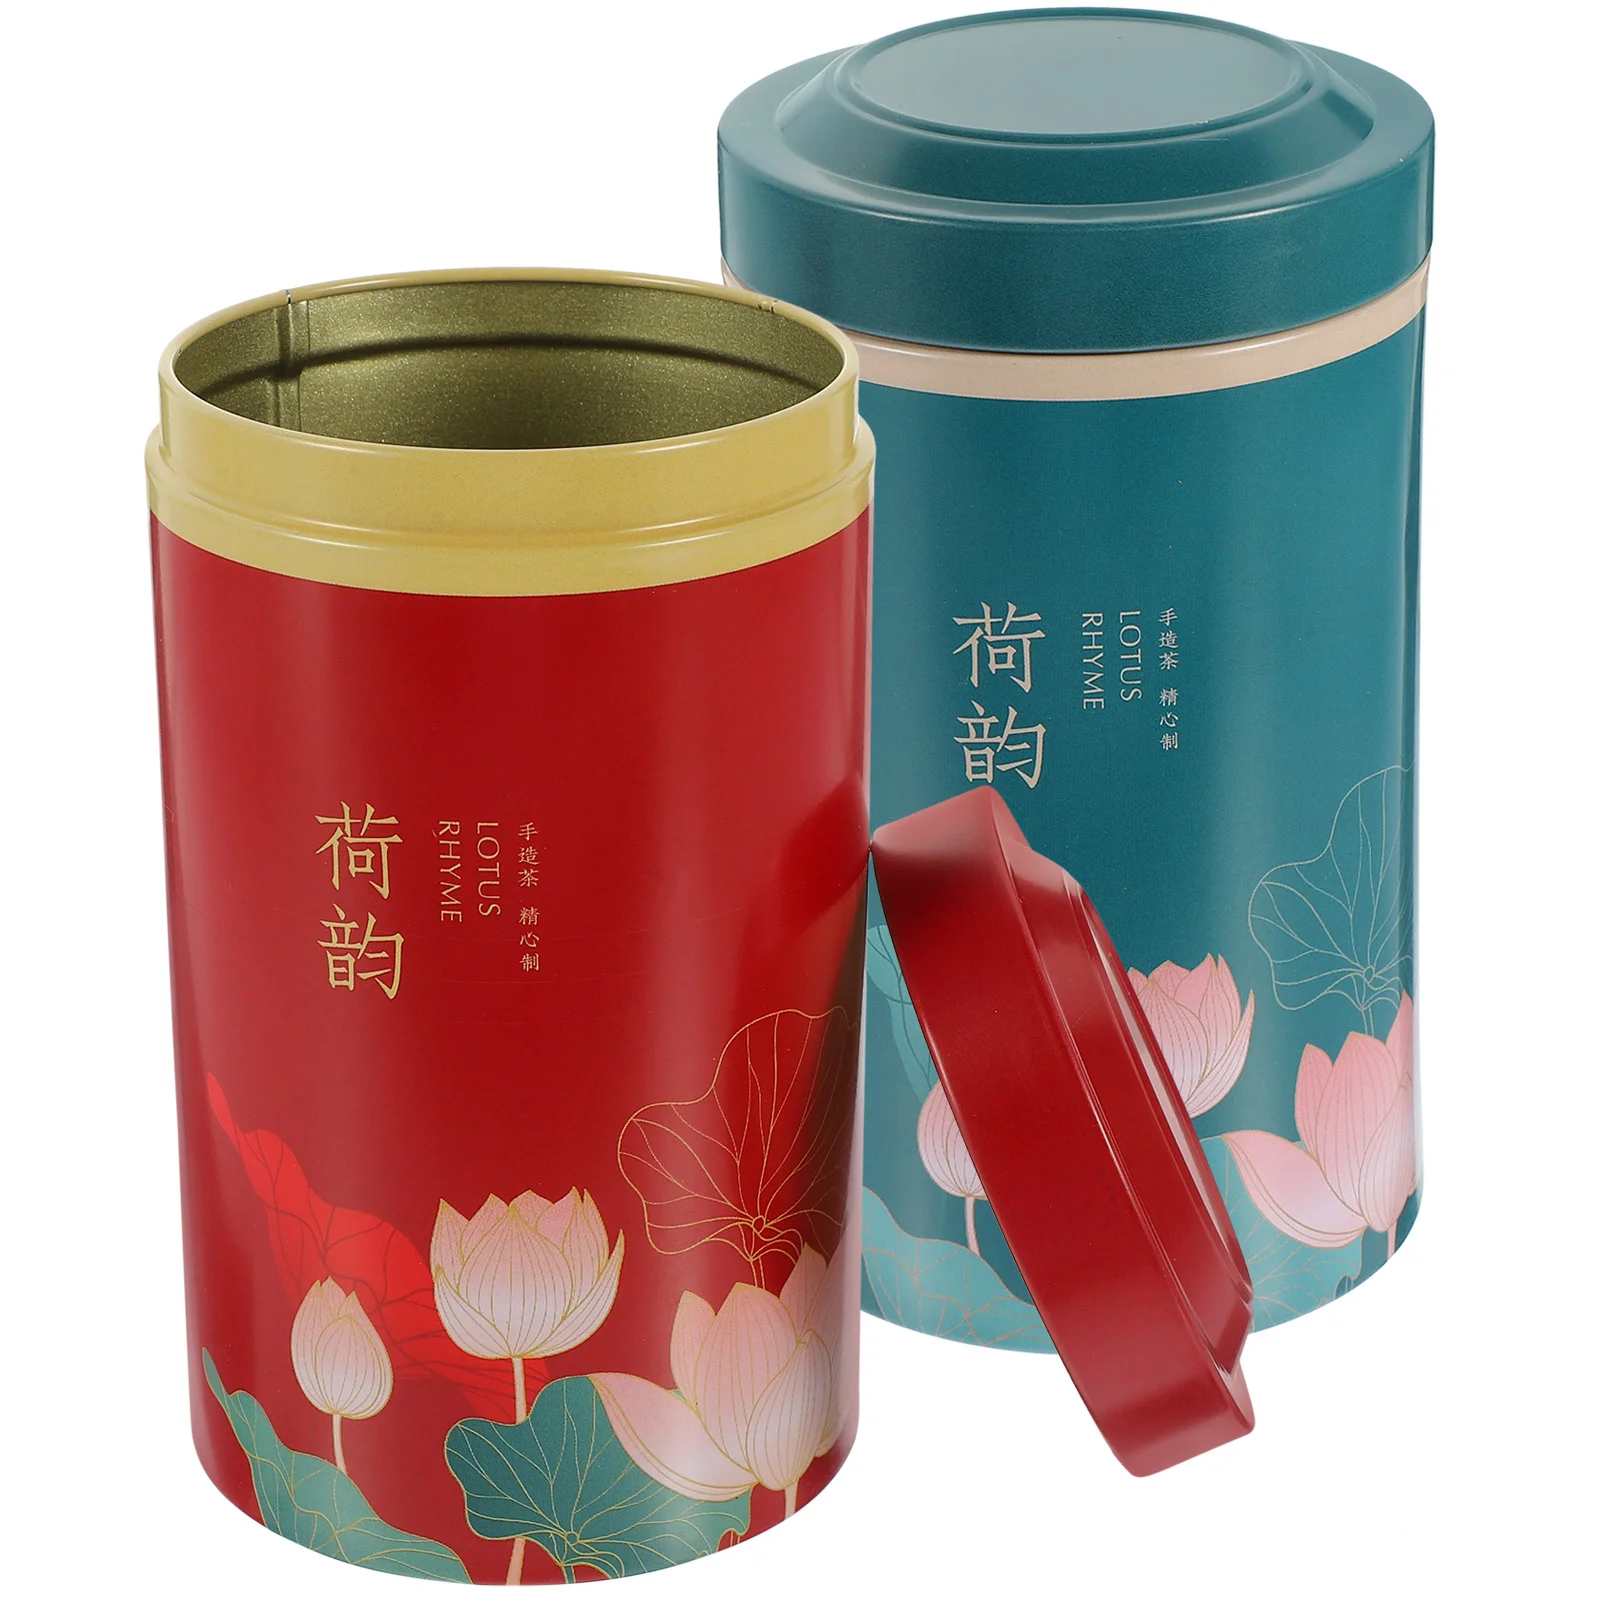 

2 Pcs Tea Airtight Can Tinplate Tins Home Tea-leaf Jar Canister Metal with Lid Set